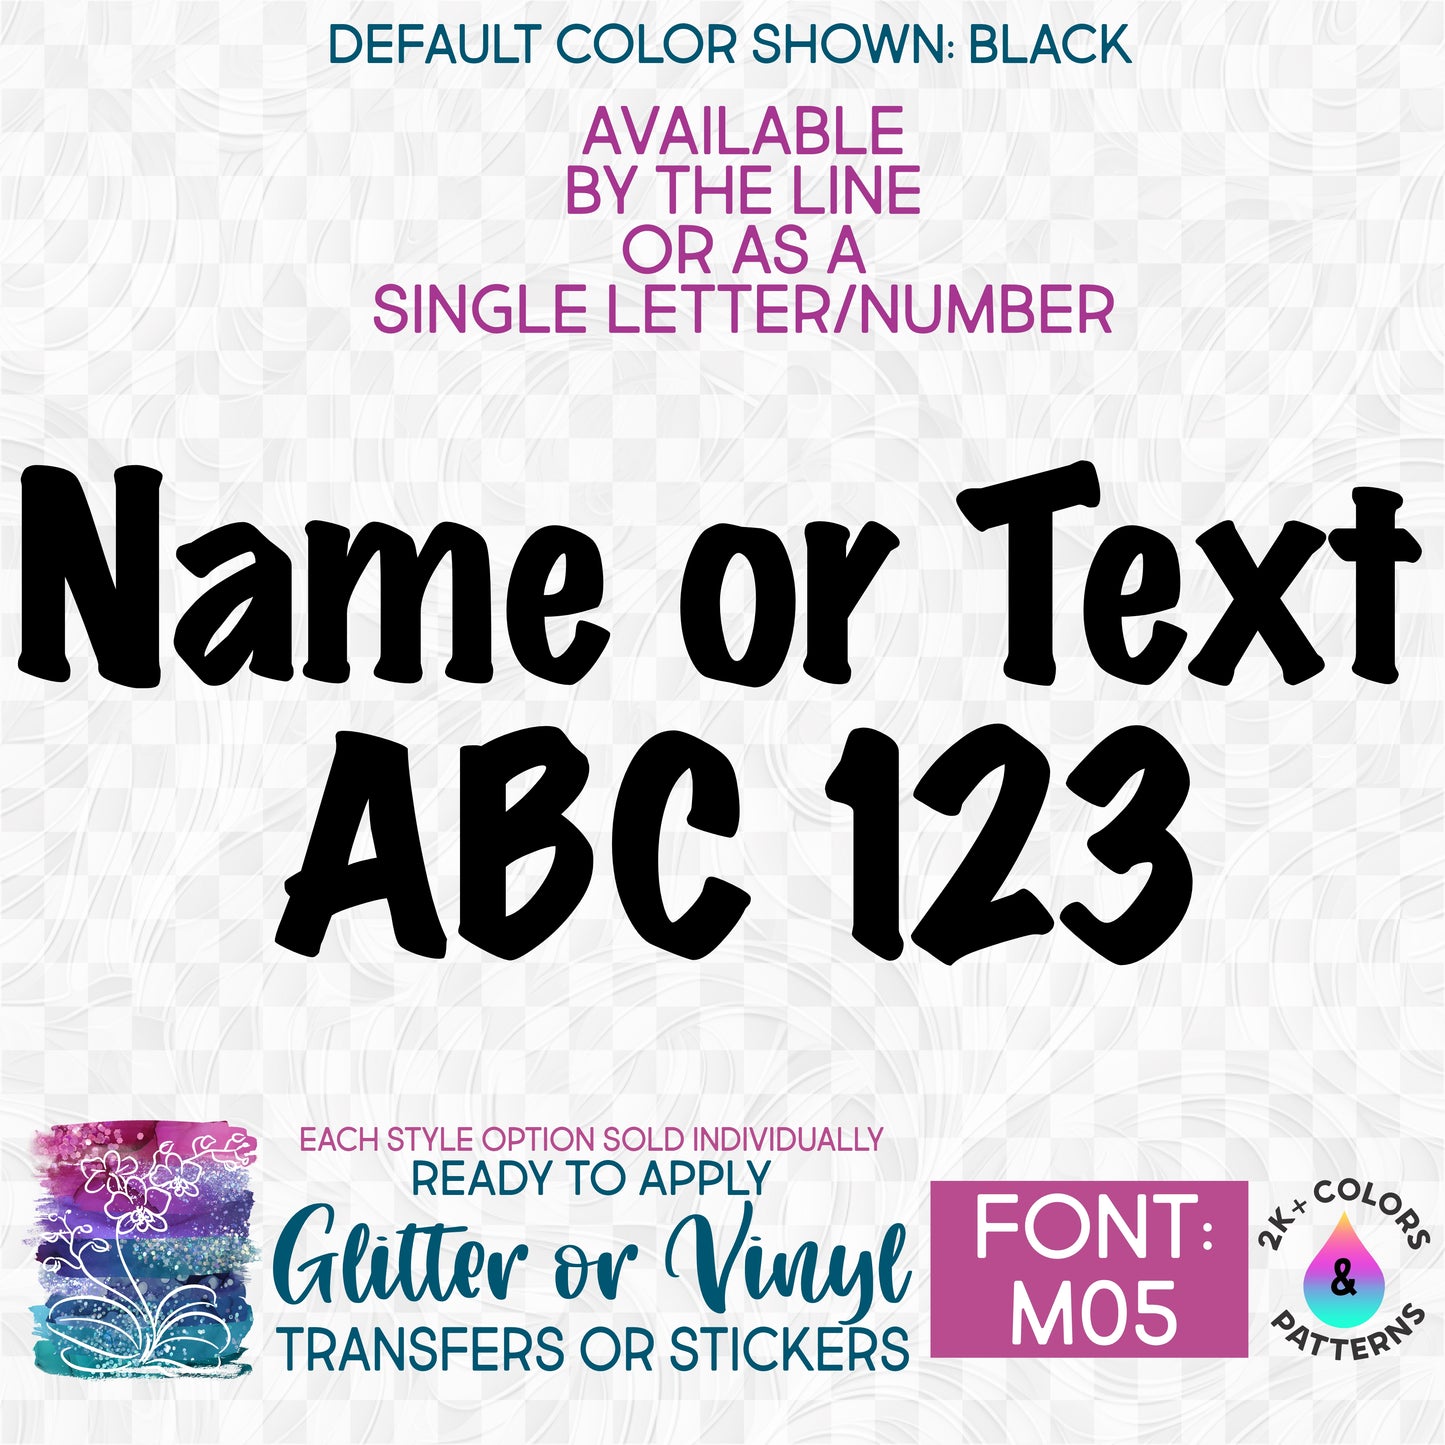 (s097-M05) Block Font Custom Name Text or Single Letter Number Glitter or Vinyl, Iron-On Transfer or Sticker